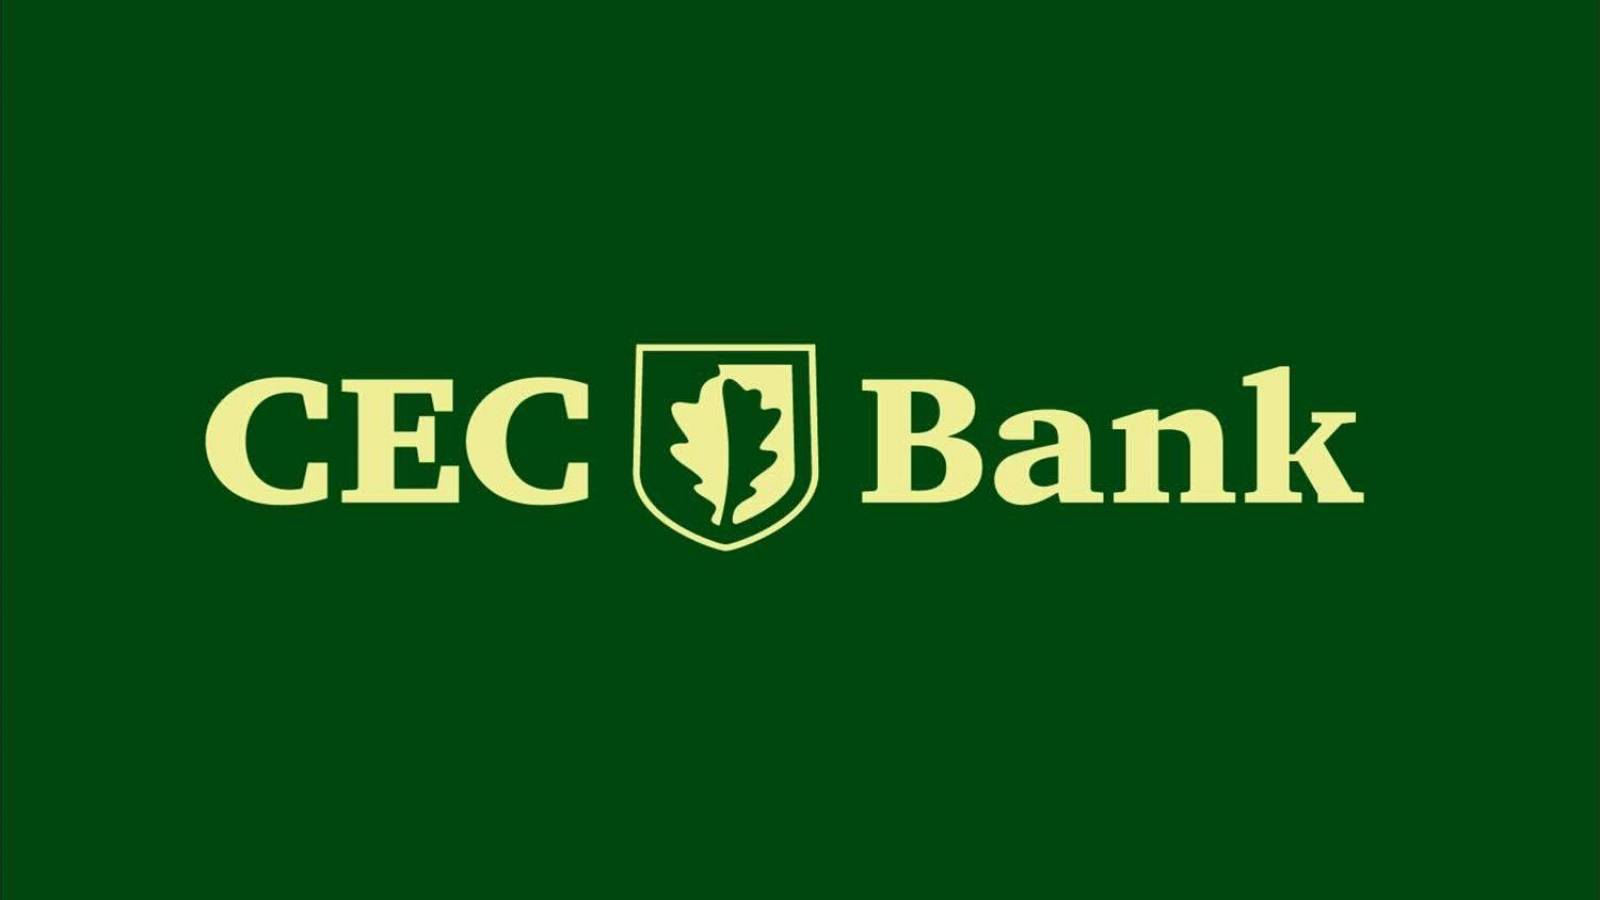 CEC Bank formular